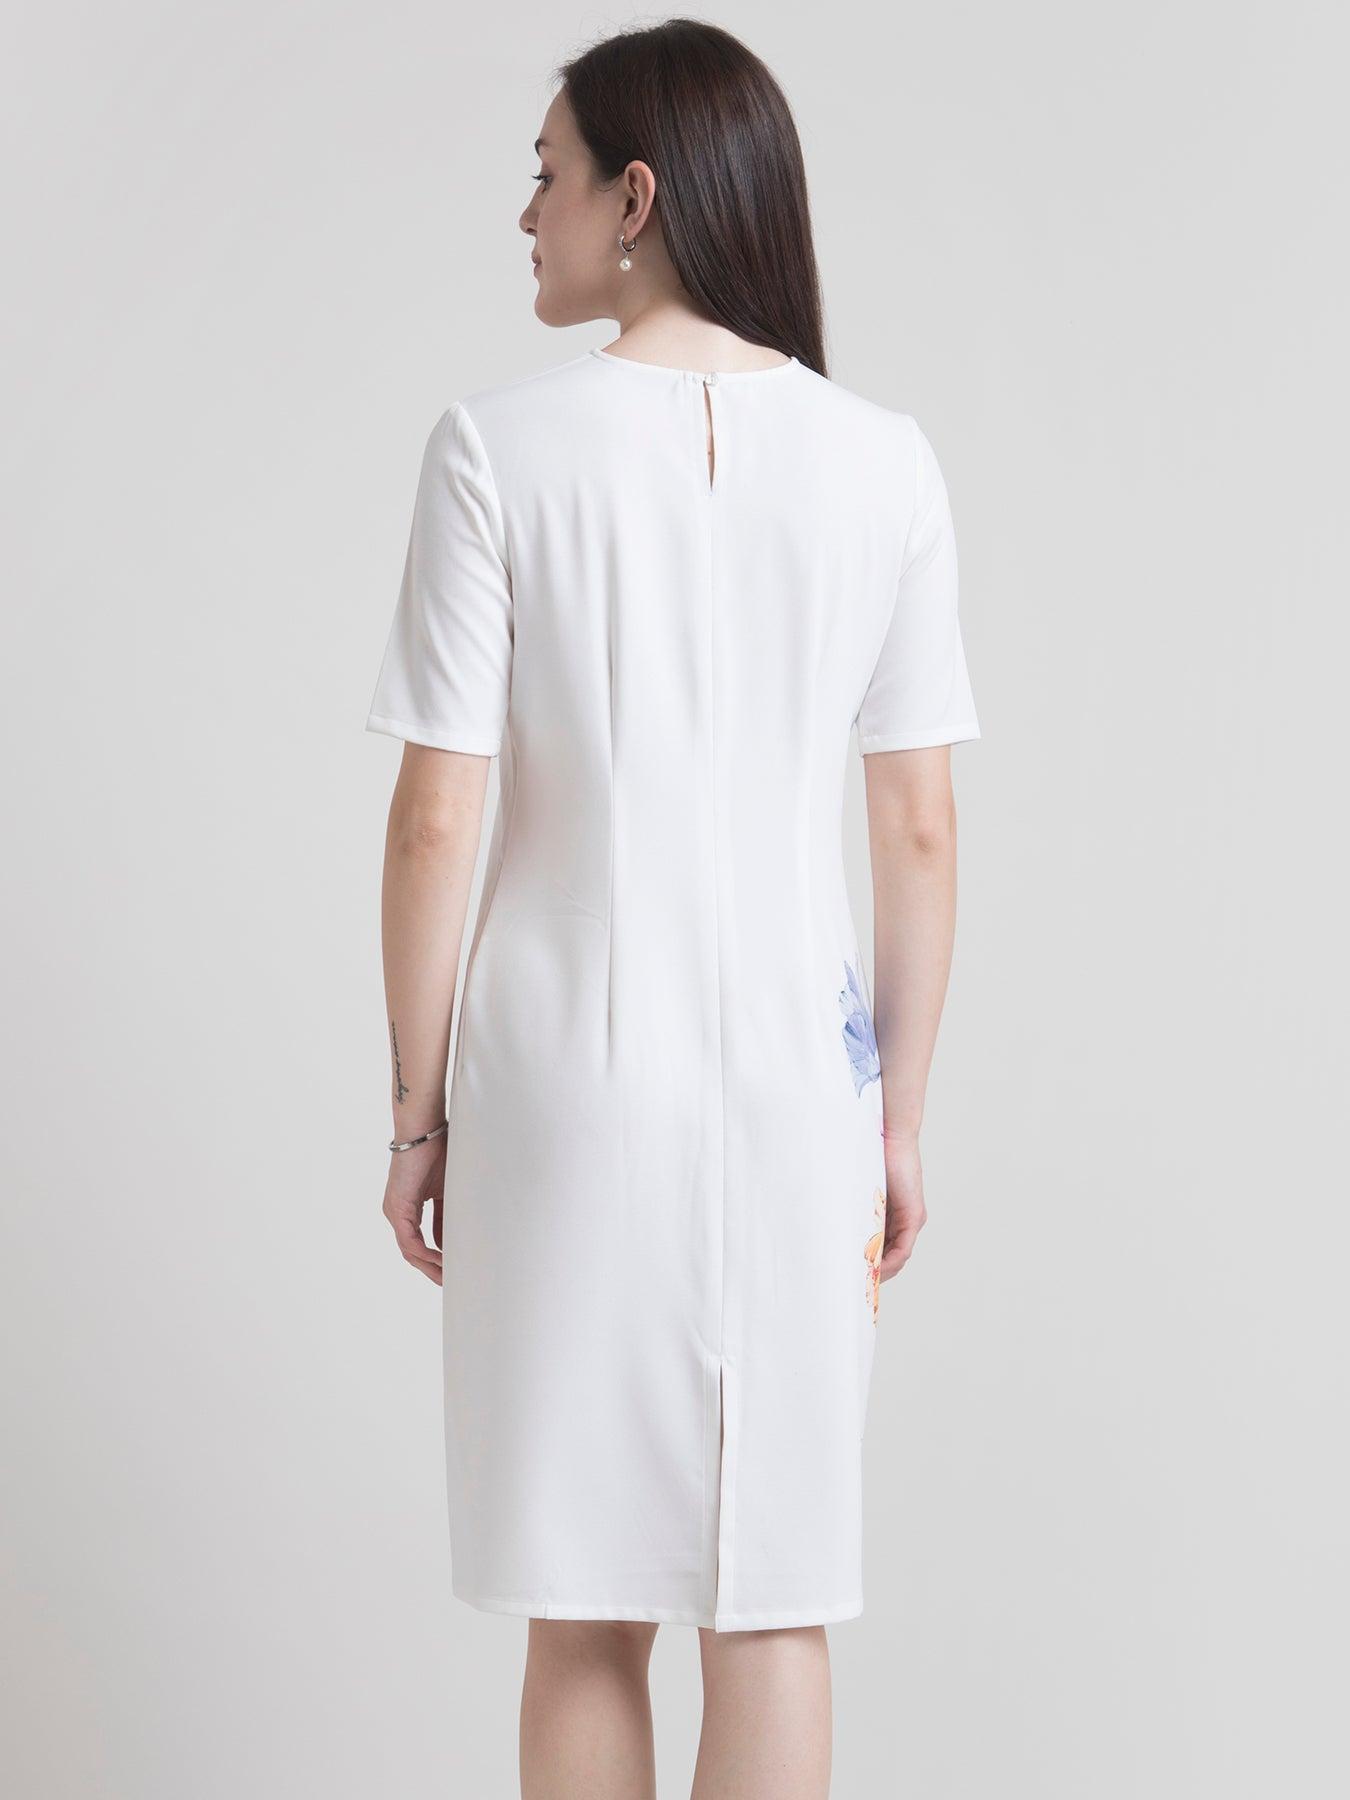 Round Neck Watercolour Floral Shift Dress - White| Formal Dresses